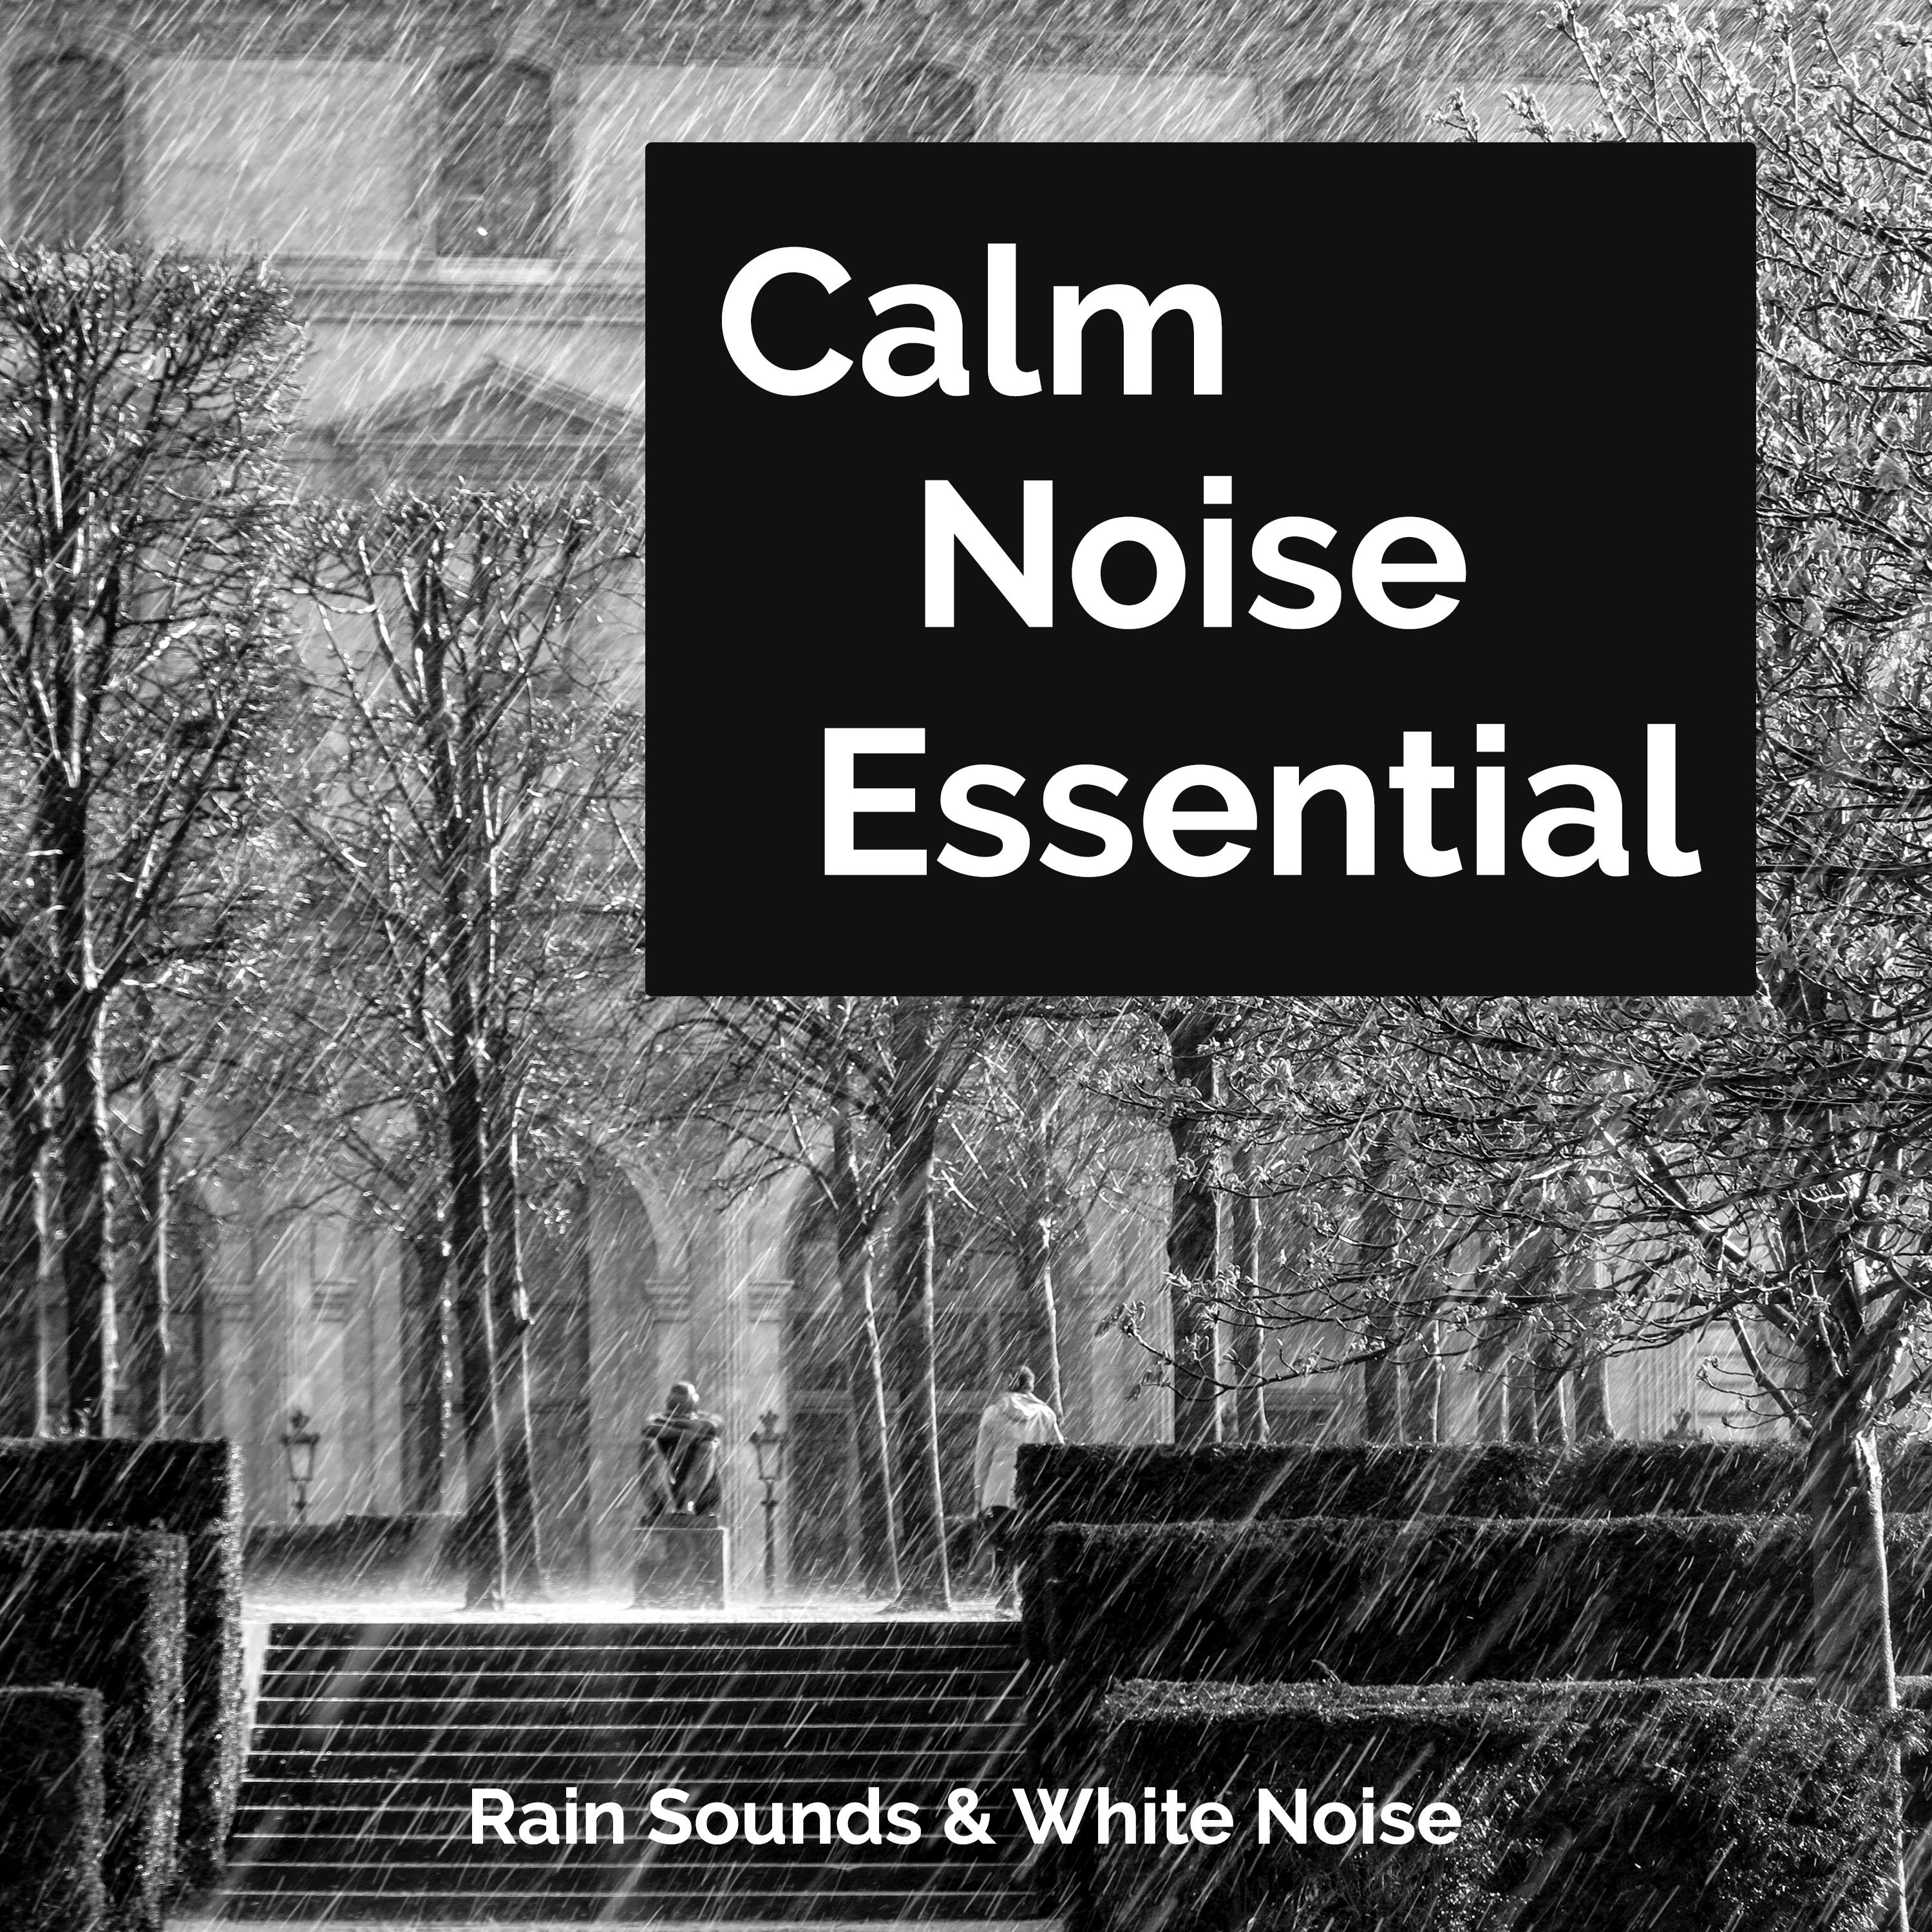 Calm Noise Essential